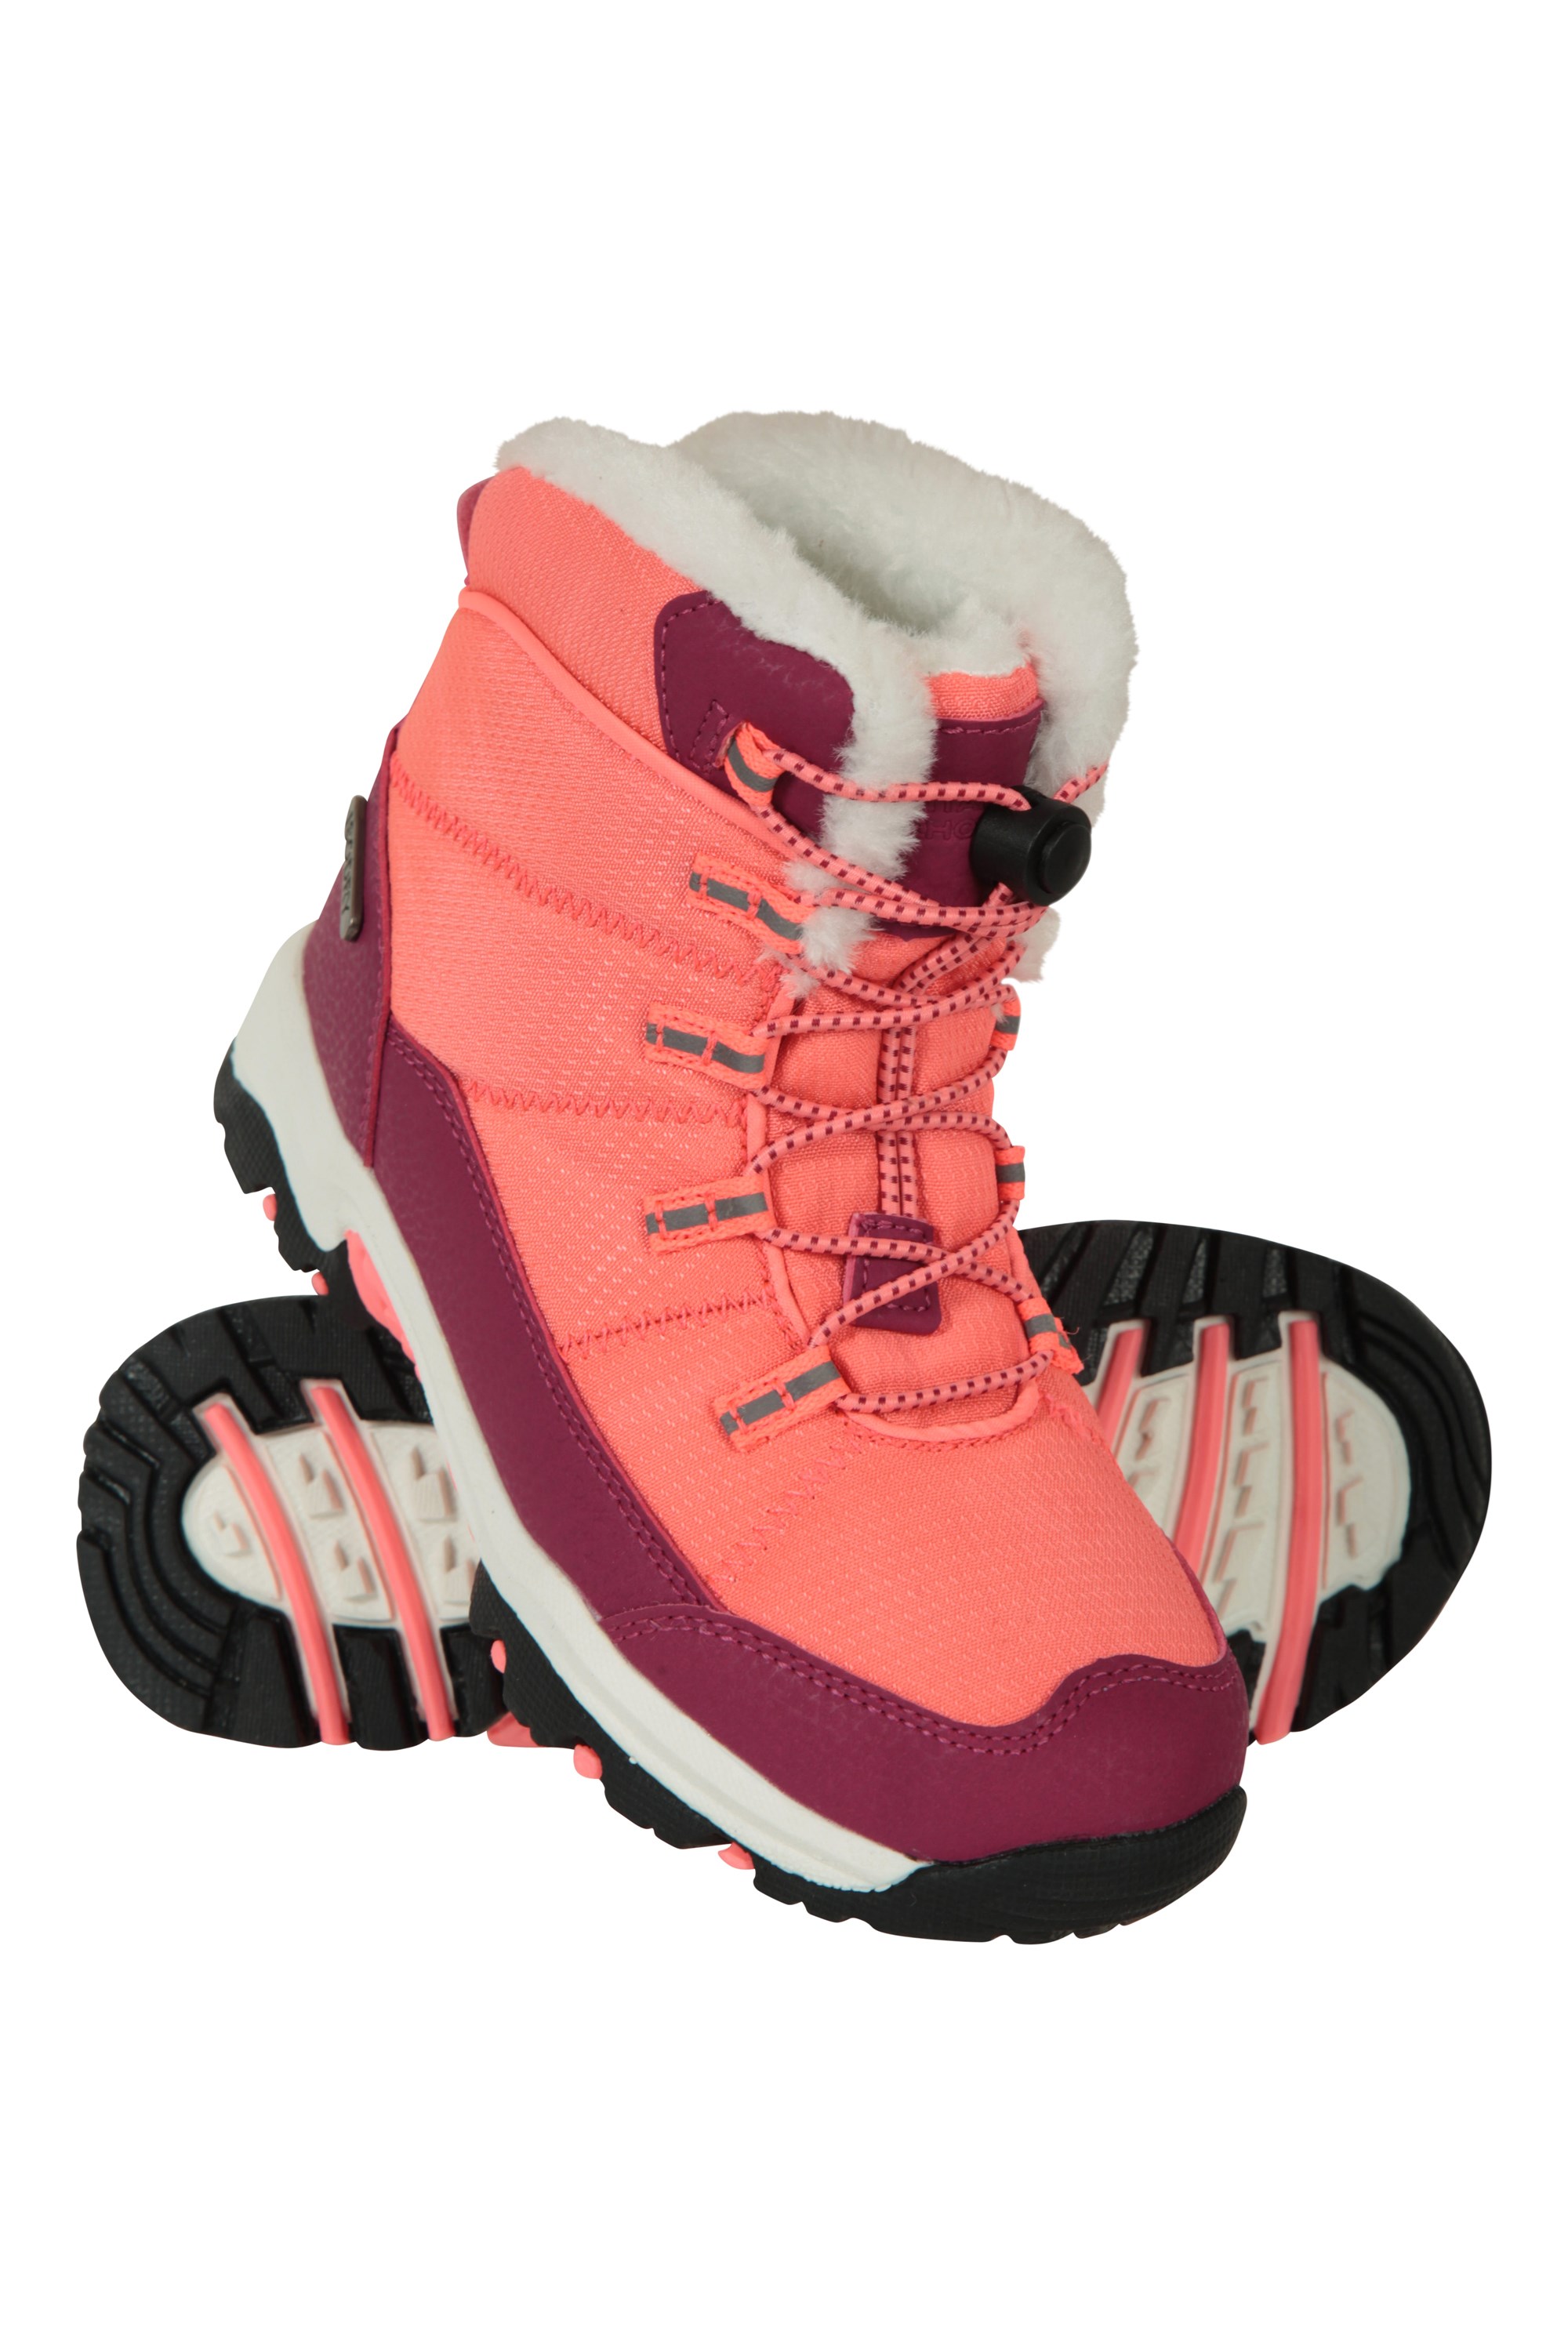 mountain warehouse kids snow boots